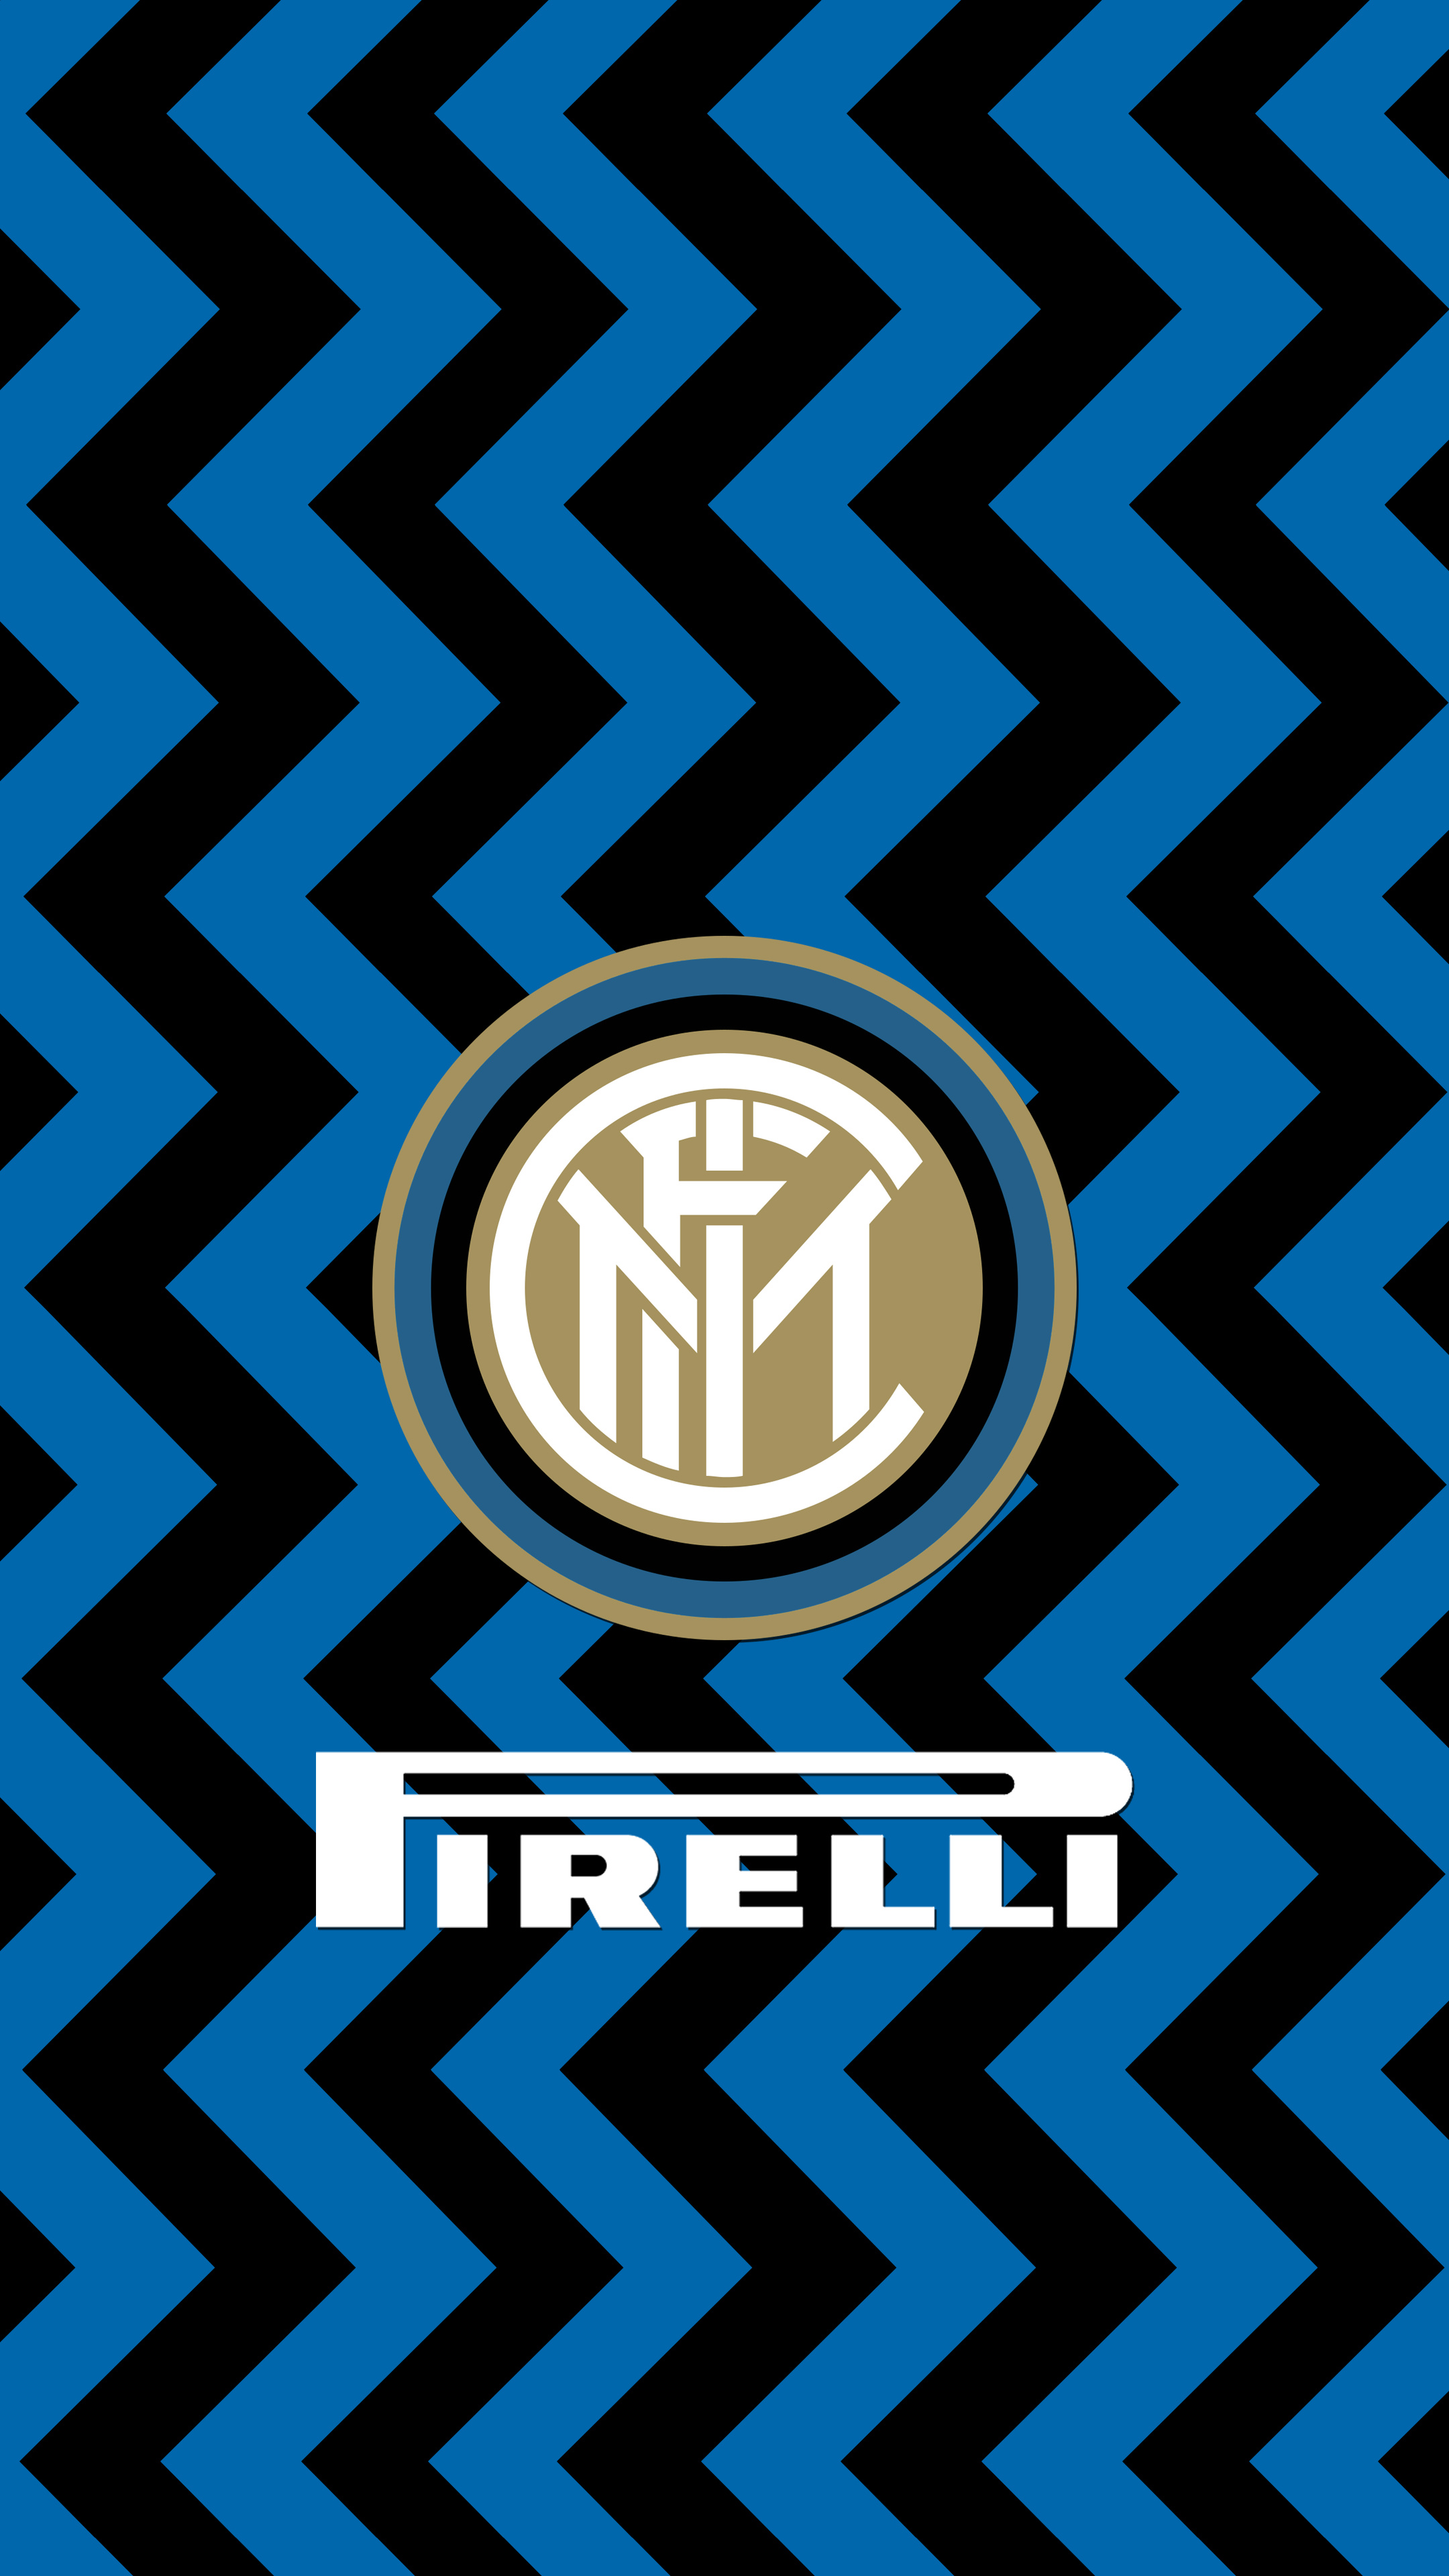 Inter: Football Club Internazionale Milano. 2160x3840 4K Background.